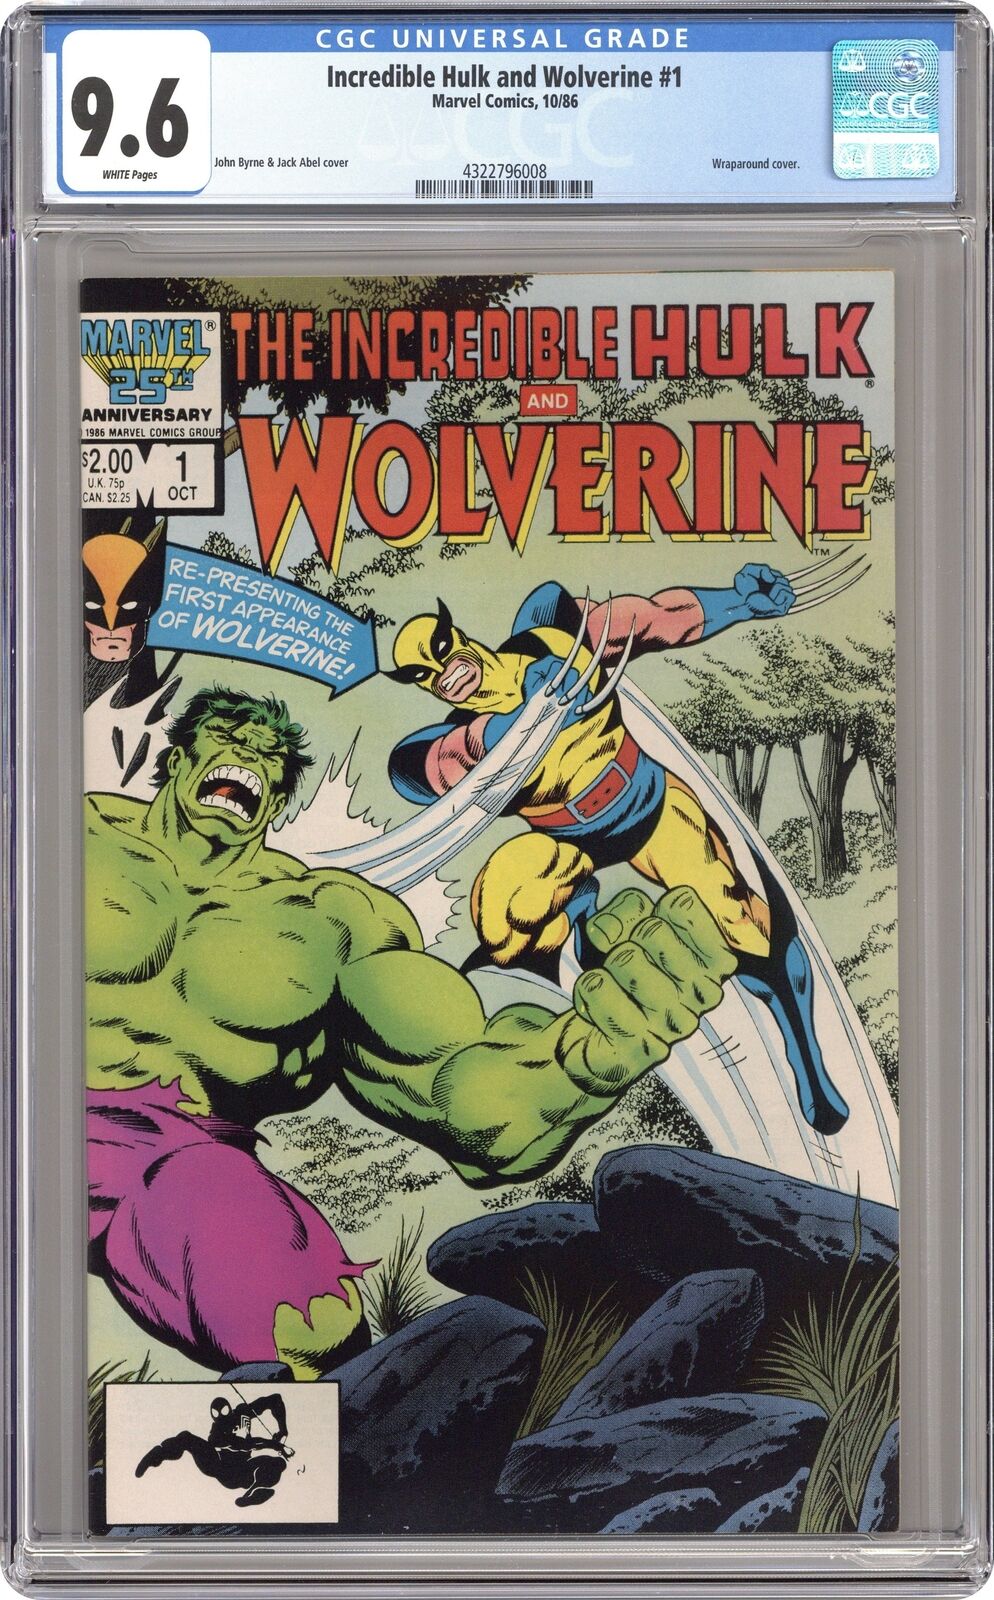 Incredible Hulk and Wolverine #1 CGC 9.6 1986 4322796008